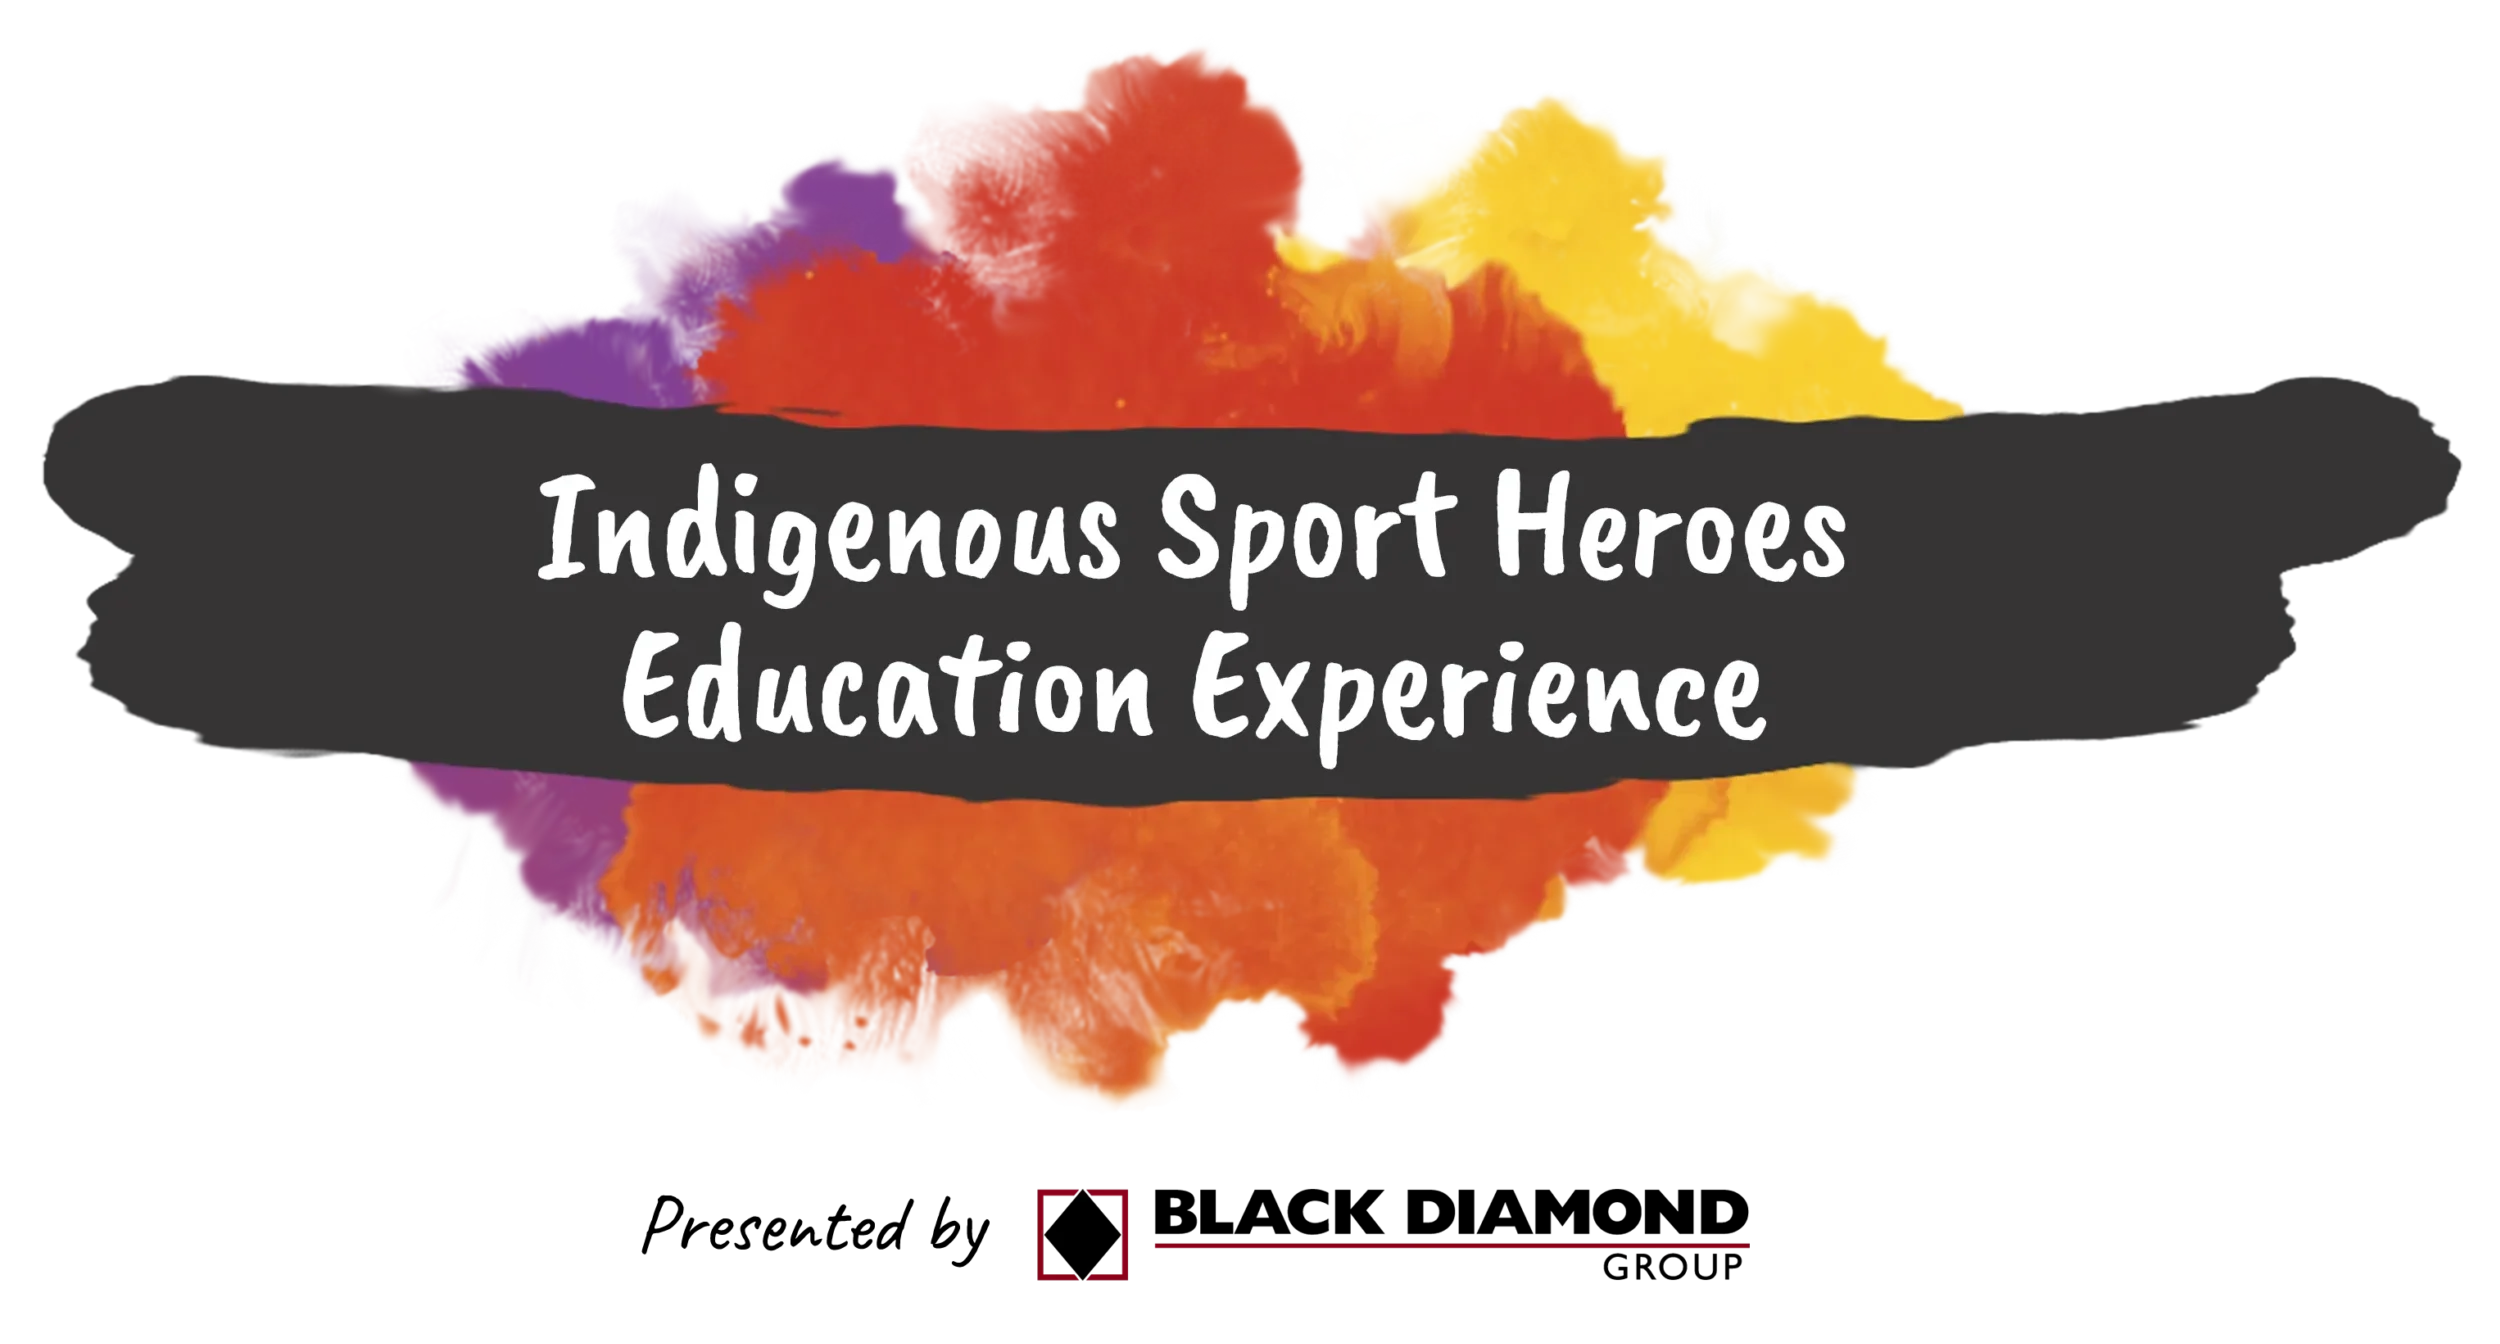 Indigenous Sport Heroes Education Experience - Presented by Black Diamond Group